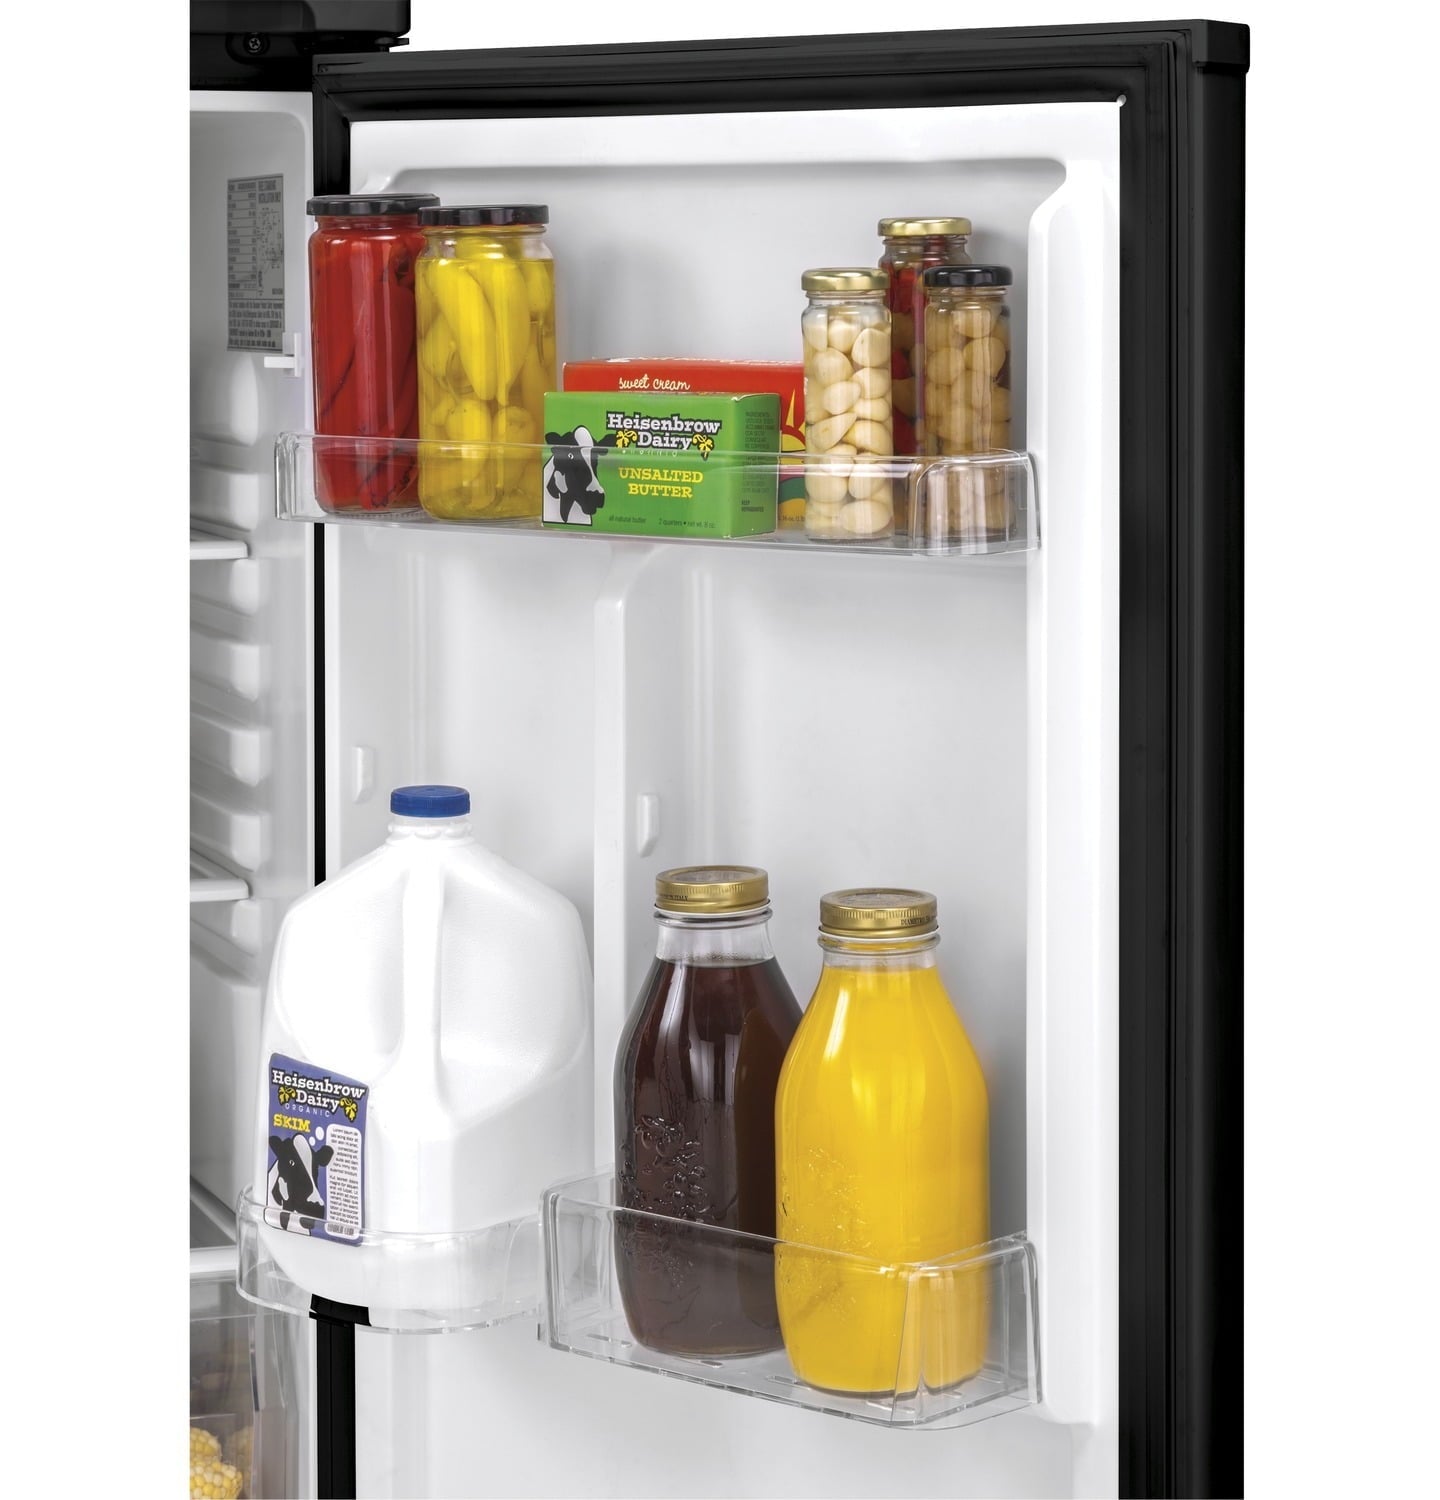 Haier HA10TG21SB 9.8 Cu. Ft. Top Freezer Refrigerator